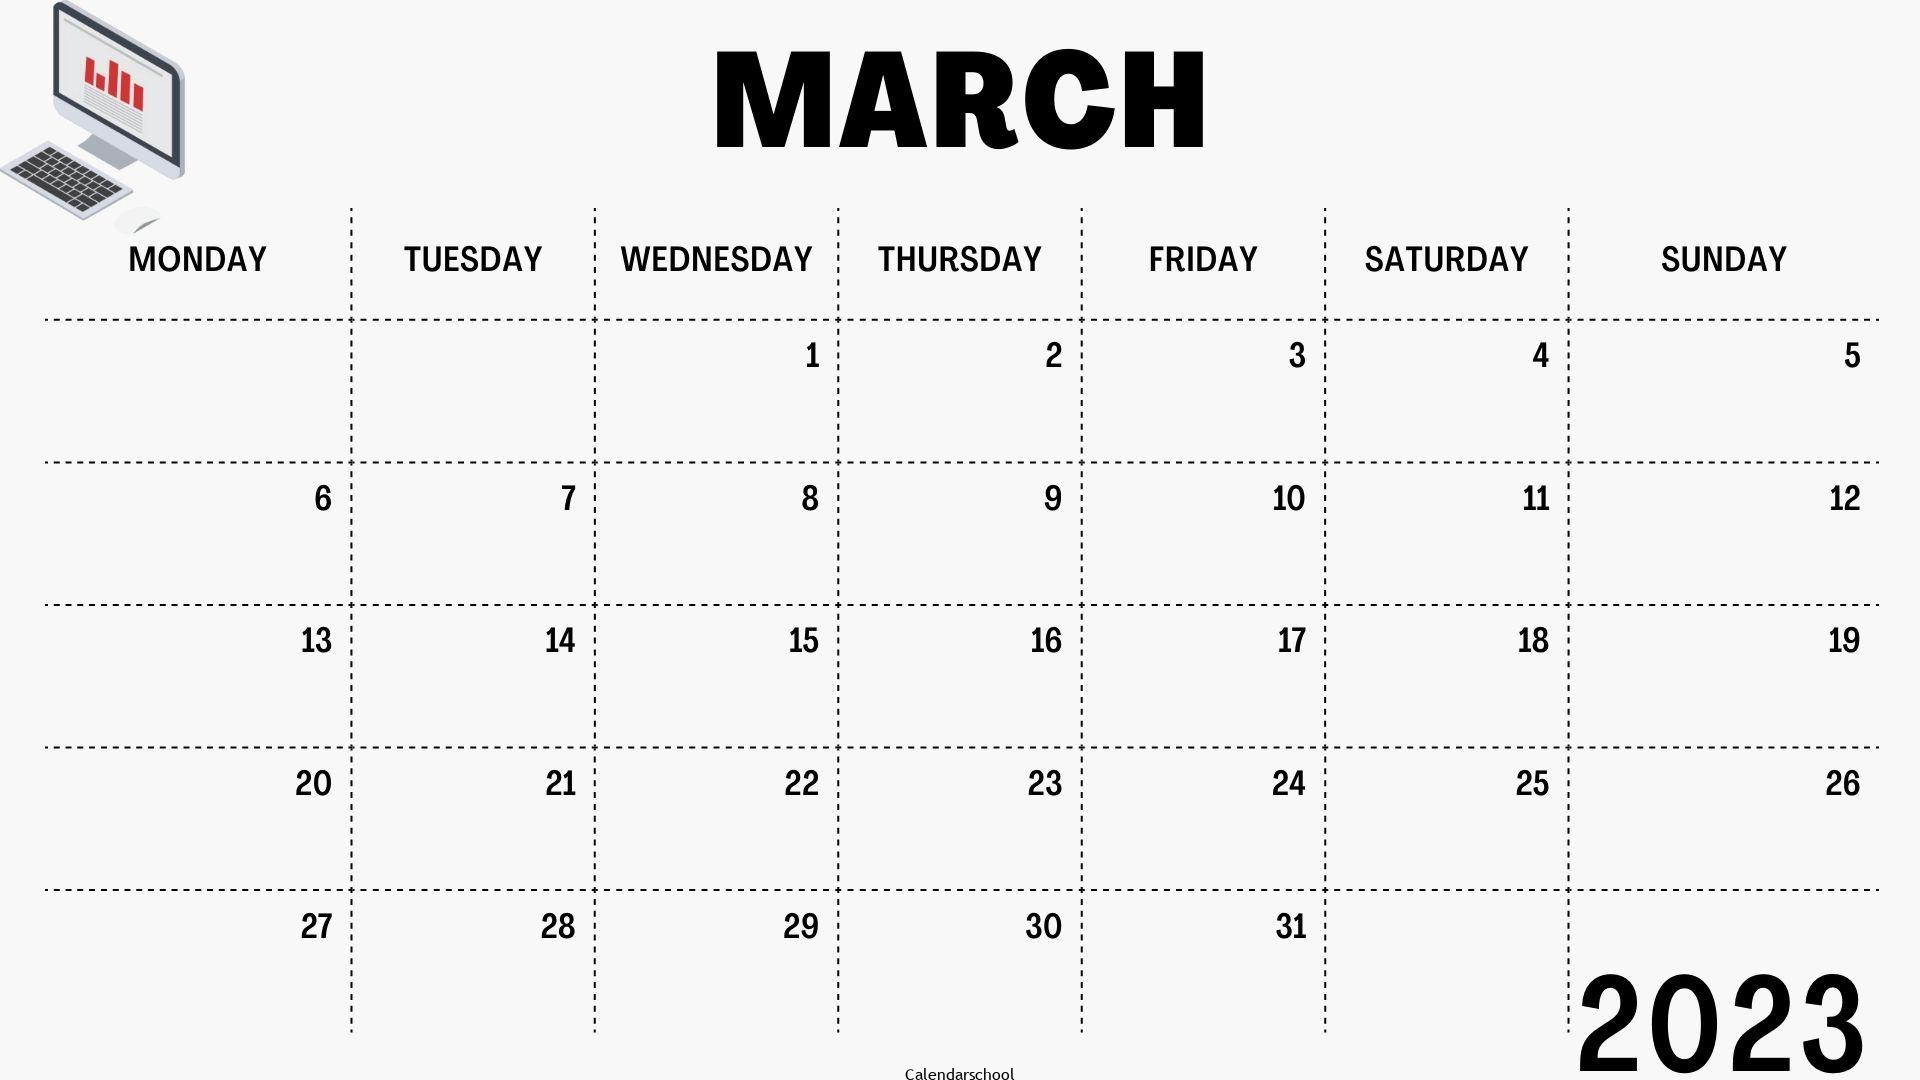 March 2023 Blank Calendar By Week